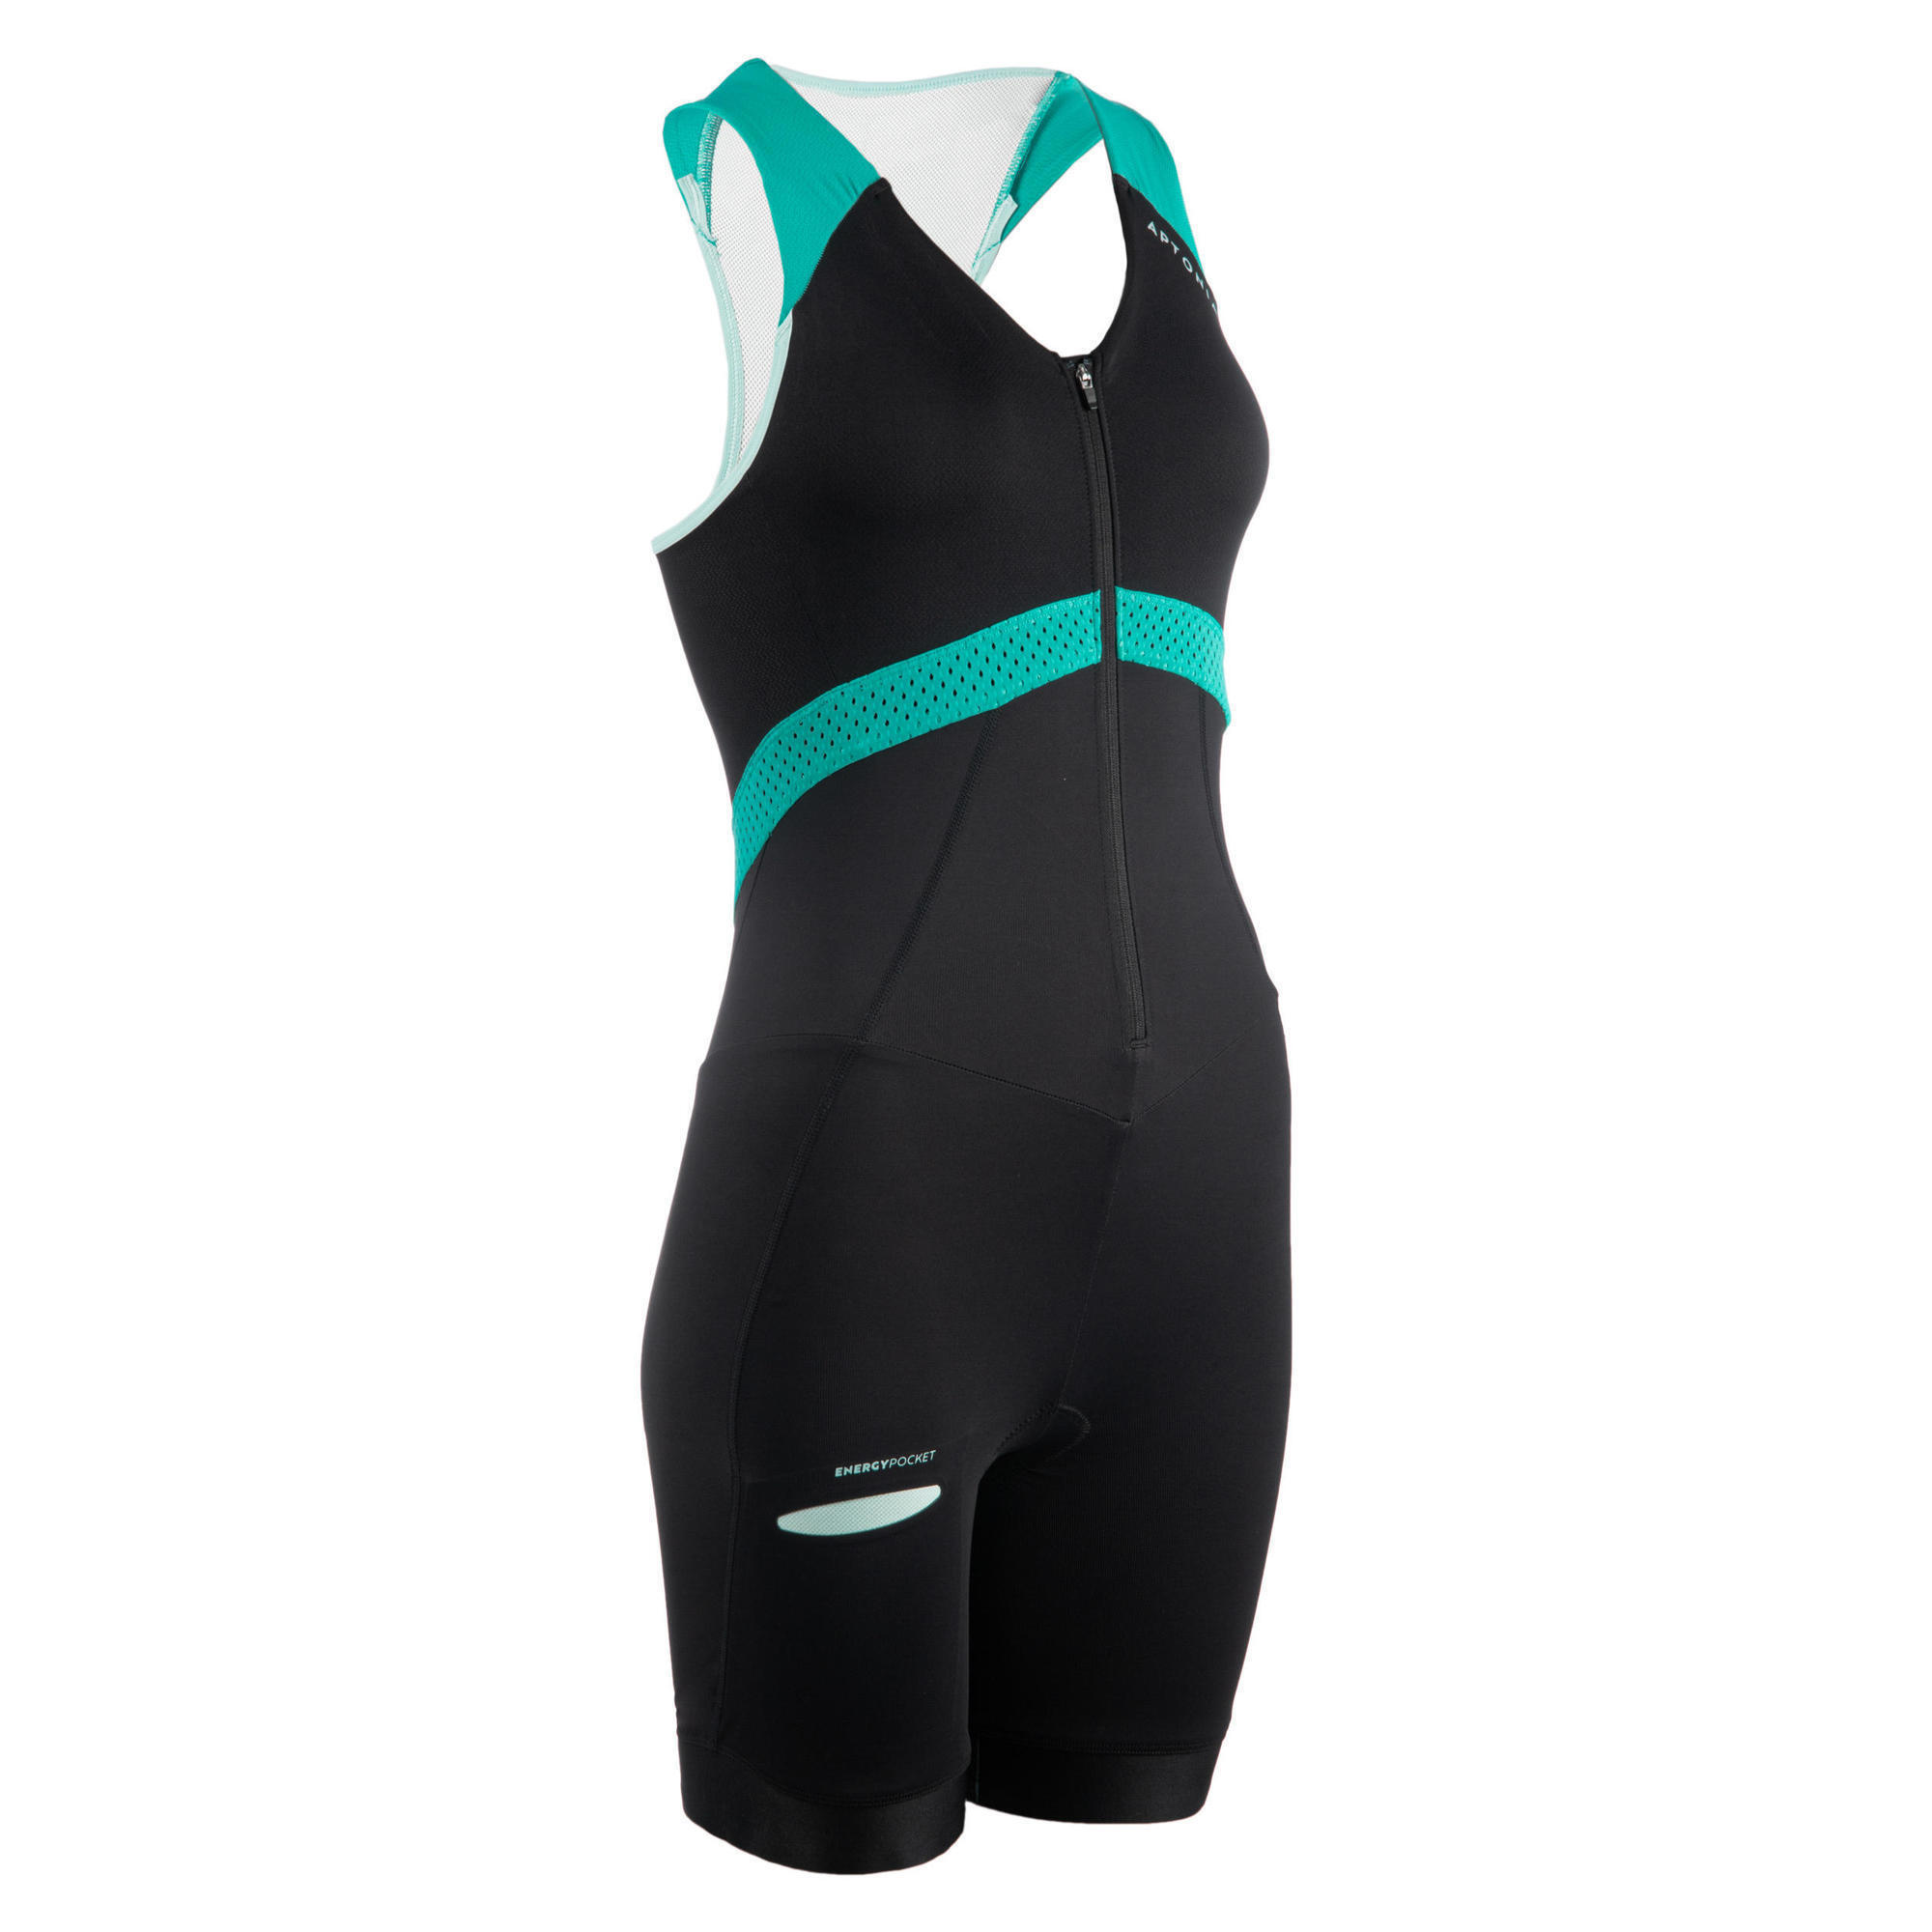 VAN RYSEL Women's Short-Distance SD Triathlon Trisuit - black/green